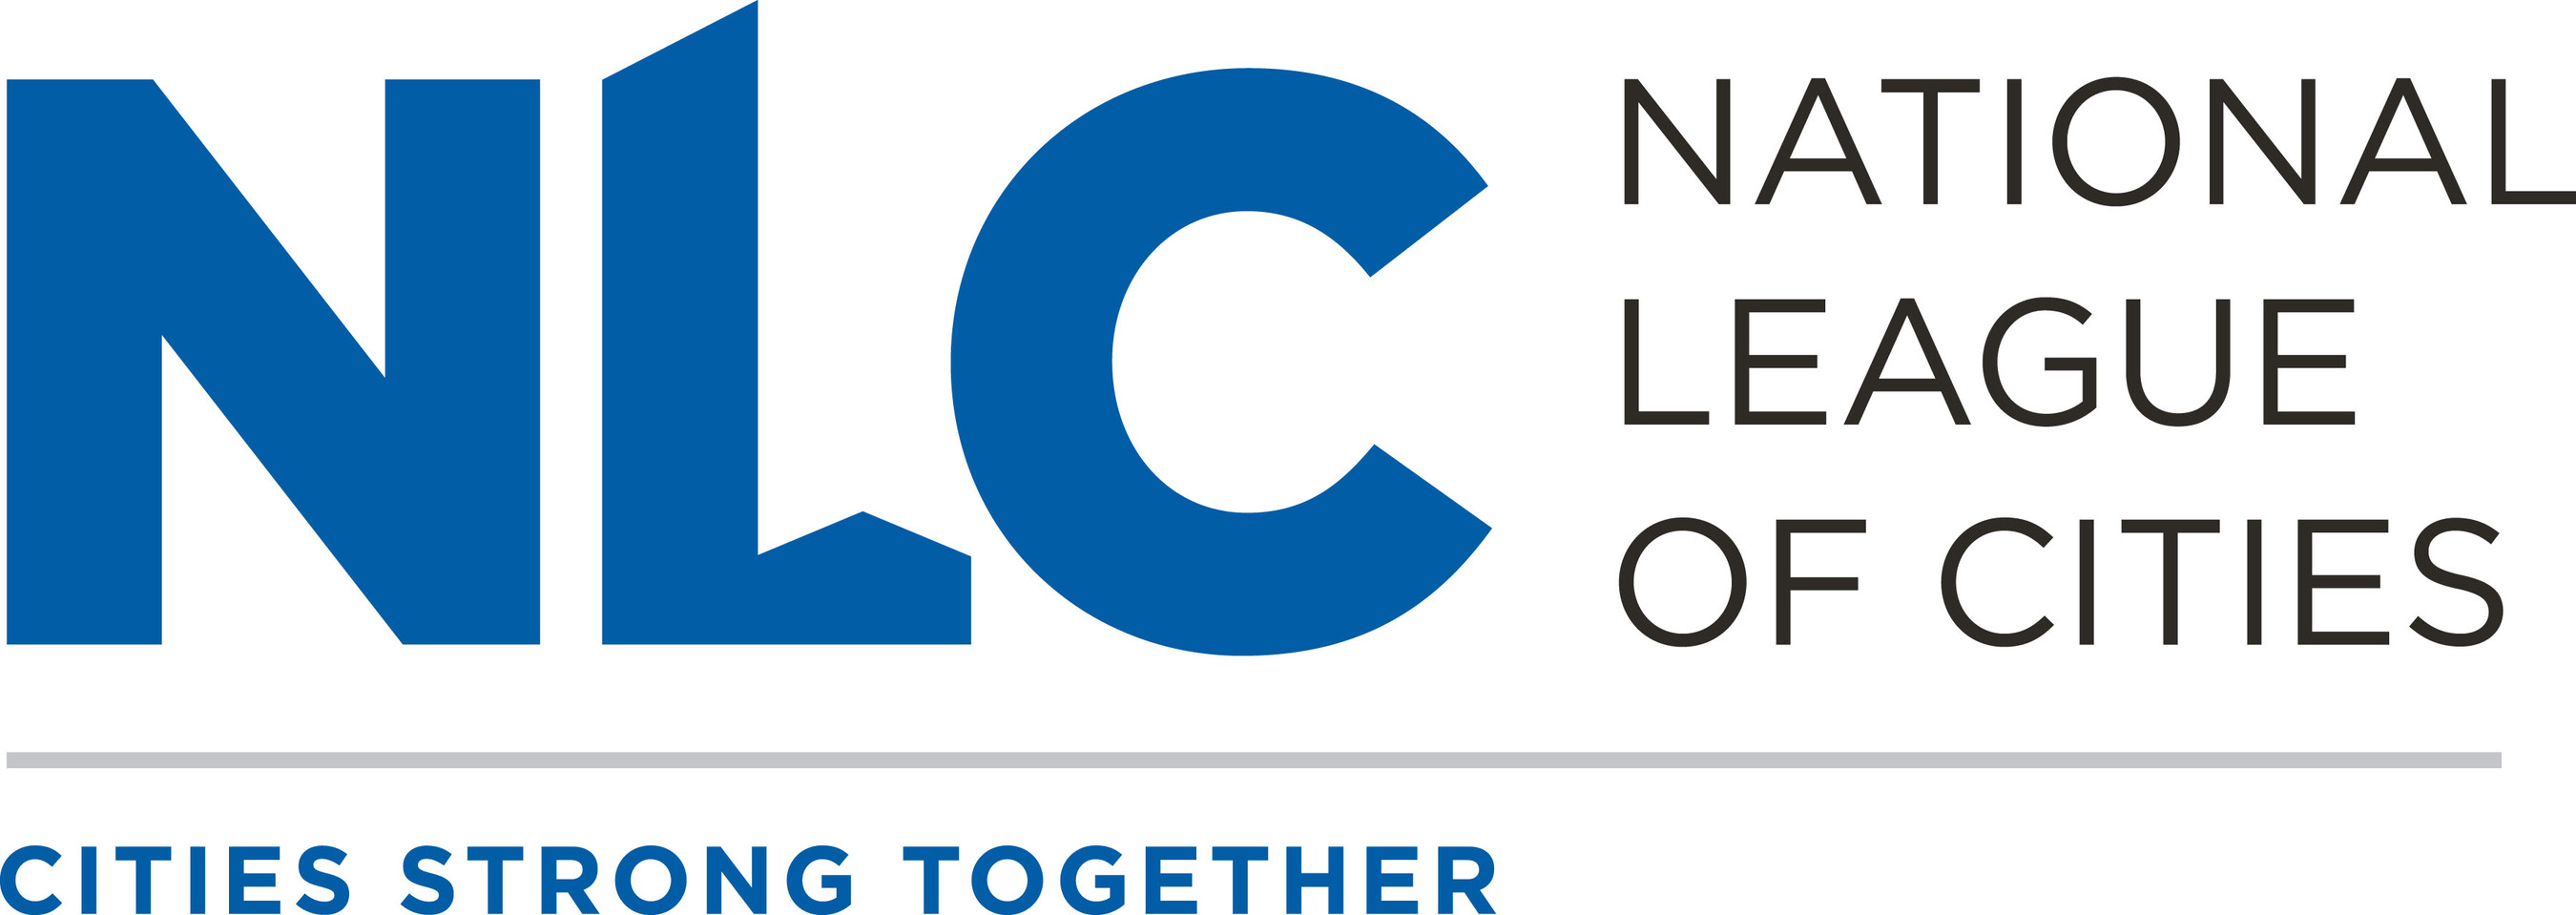 National League of Cities logo. (PRNewsFoto/National League of Cities) (PRNewsFoto/)